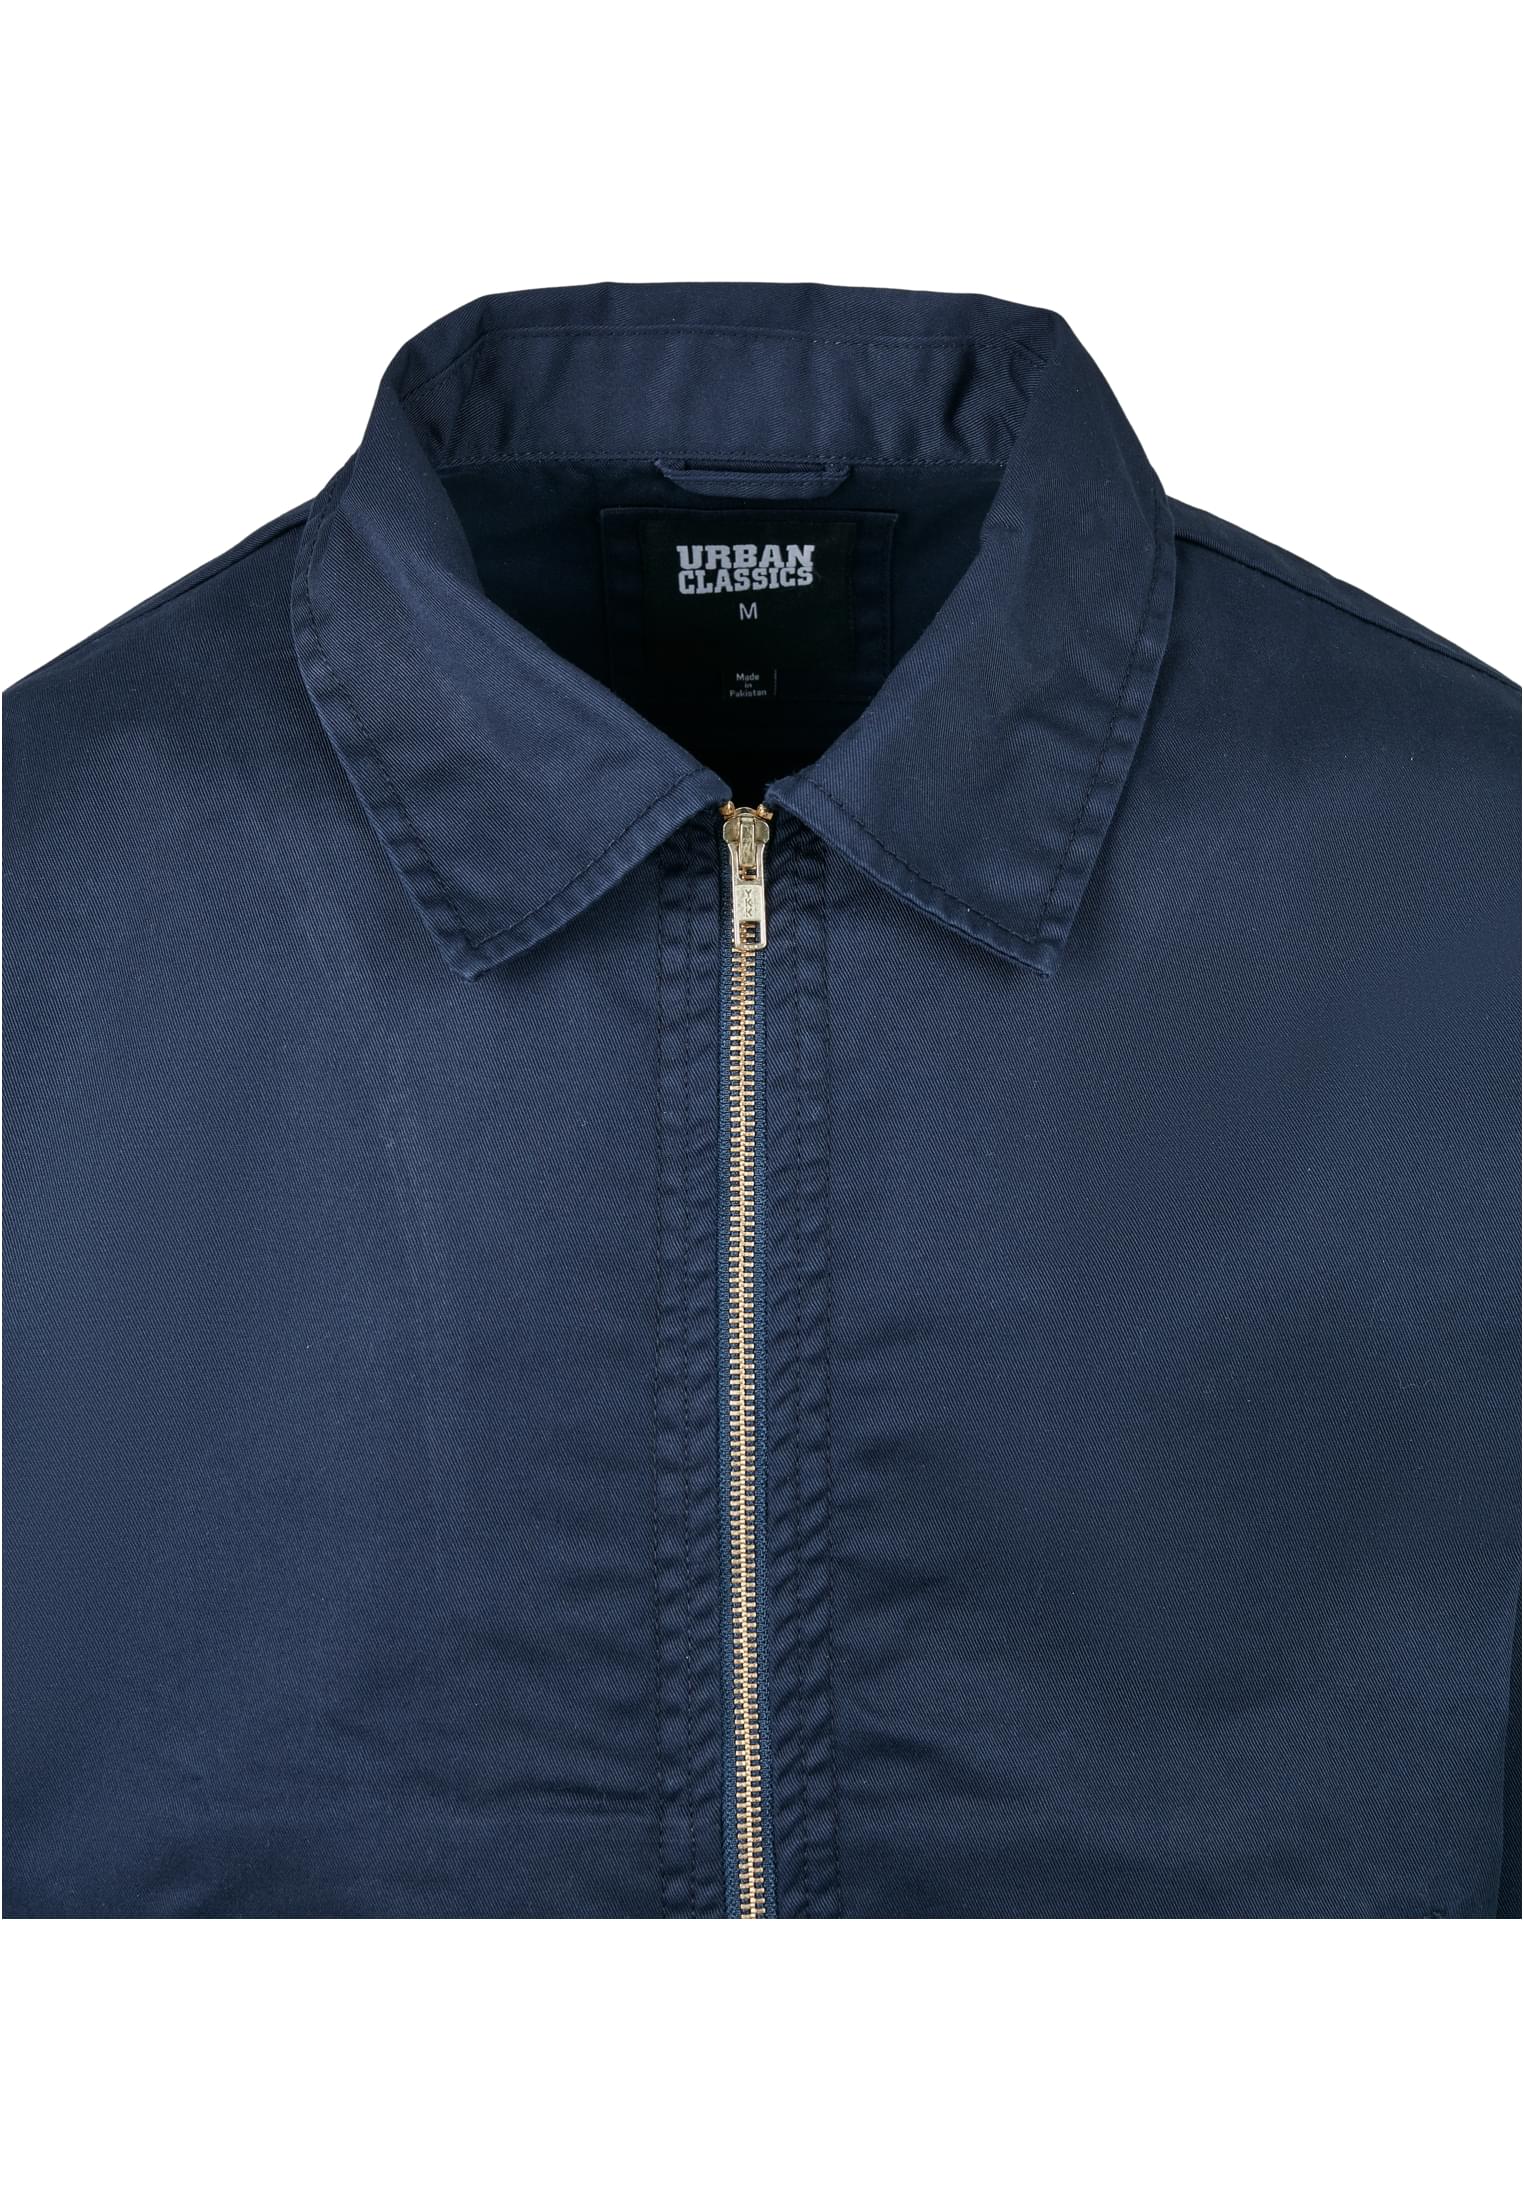 Jacket-TB3700 Workwear